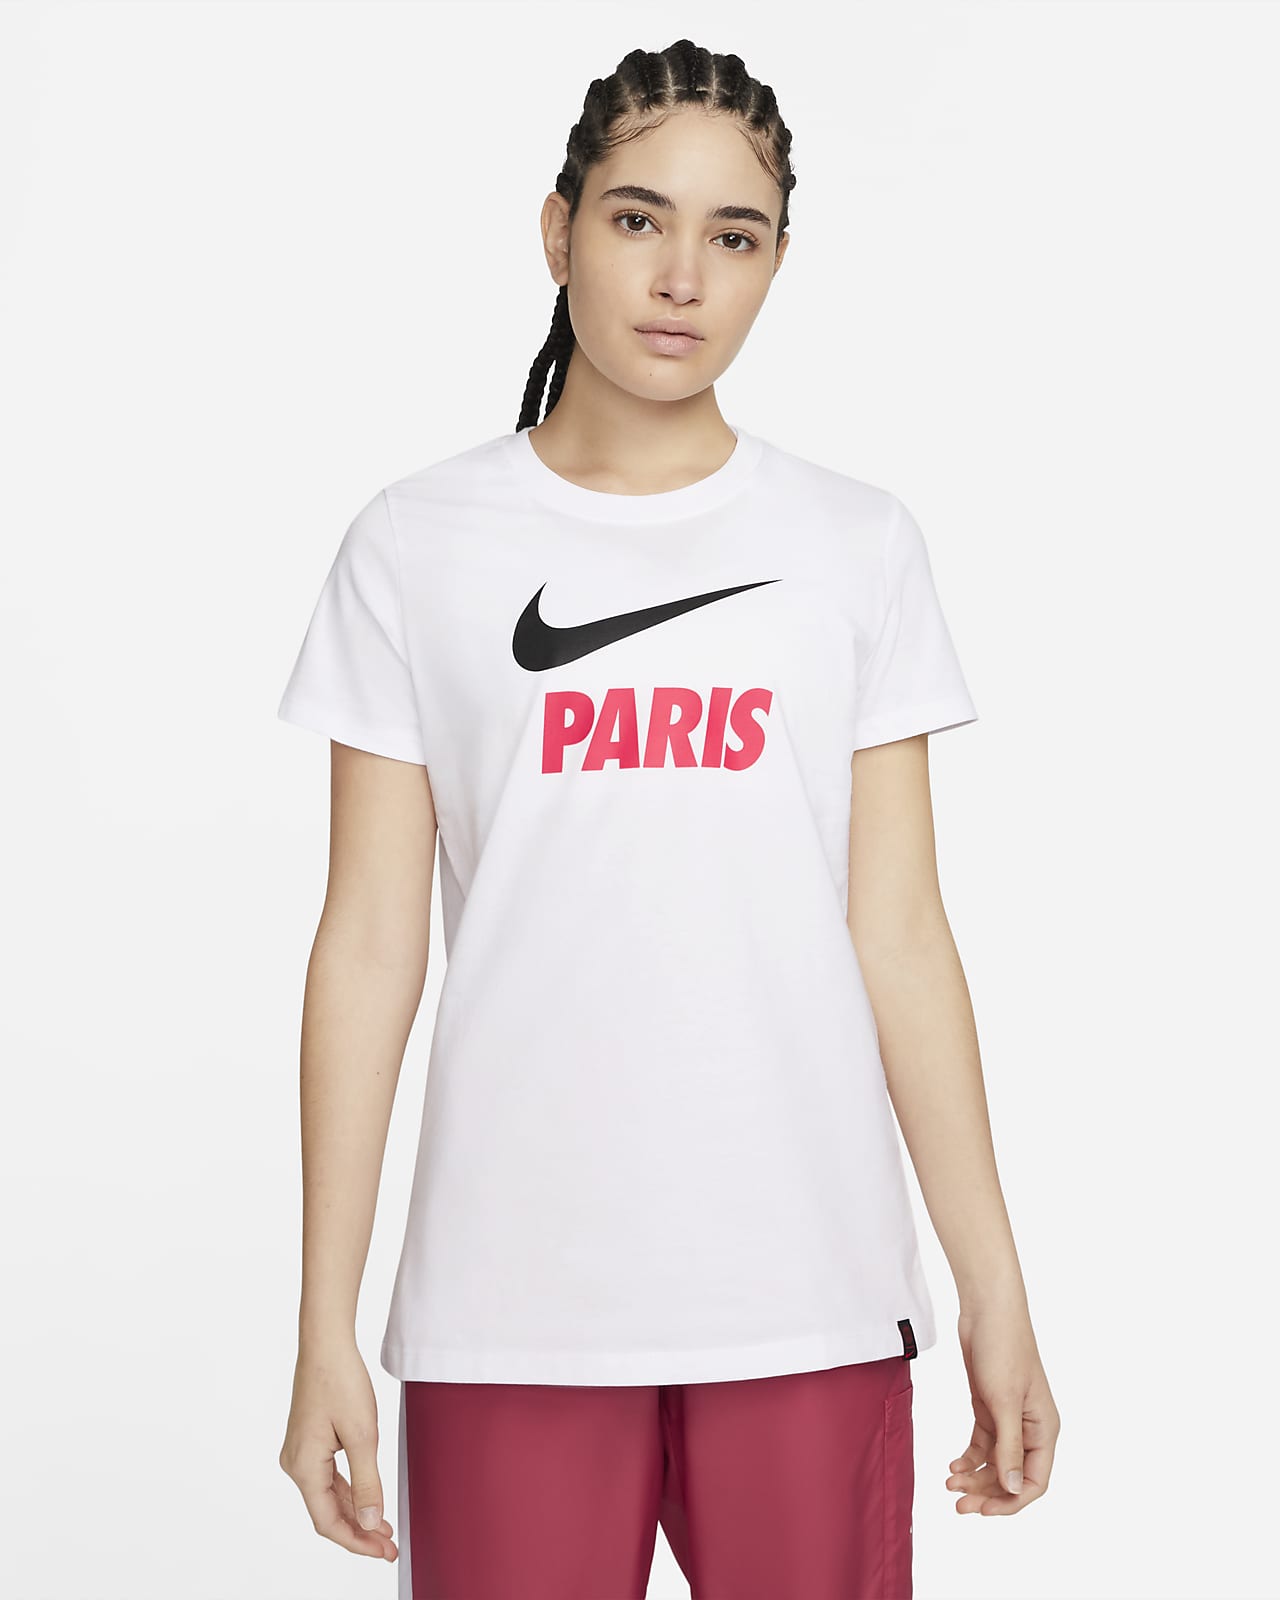 Nike Париж. Paris Nike футболка женская. Футболка найк PSG. Футболка Париж найк Буда. Найк париж